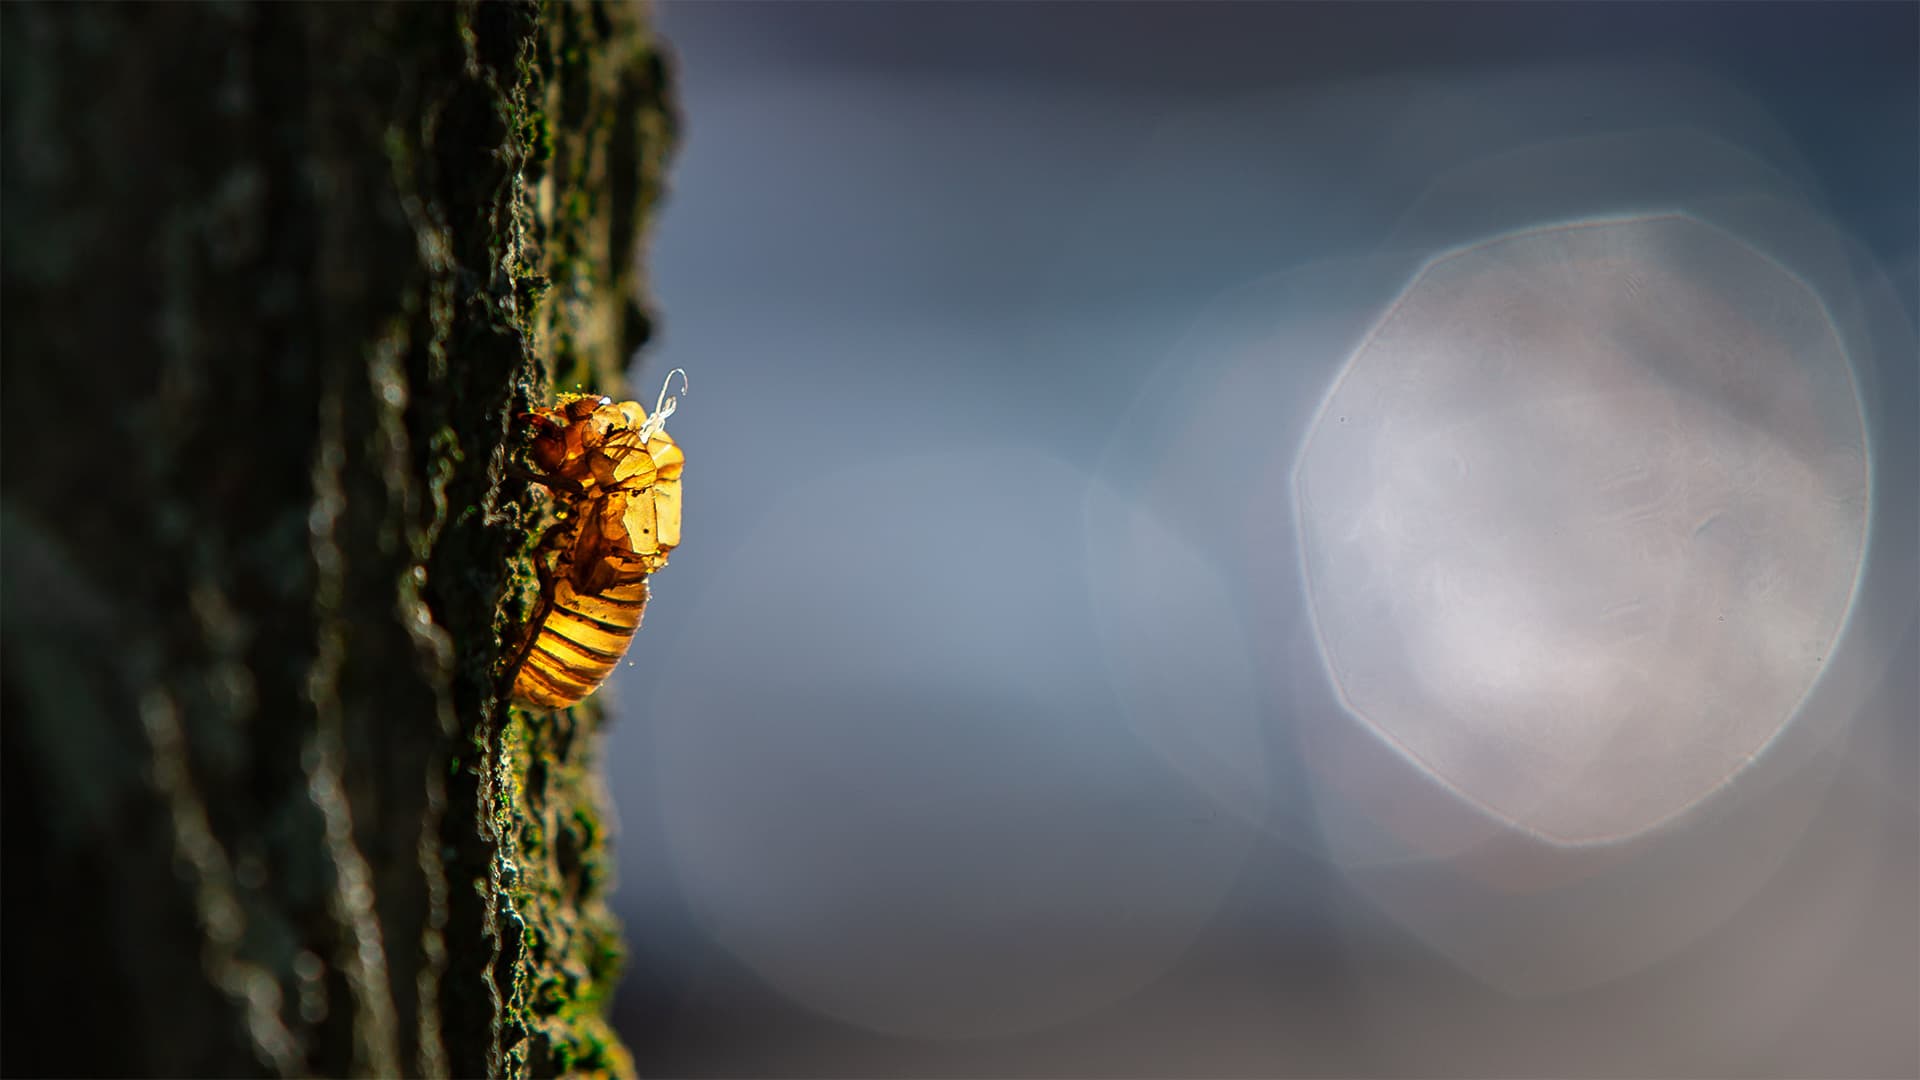 Cicada skin on a tree